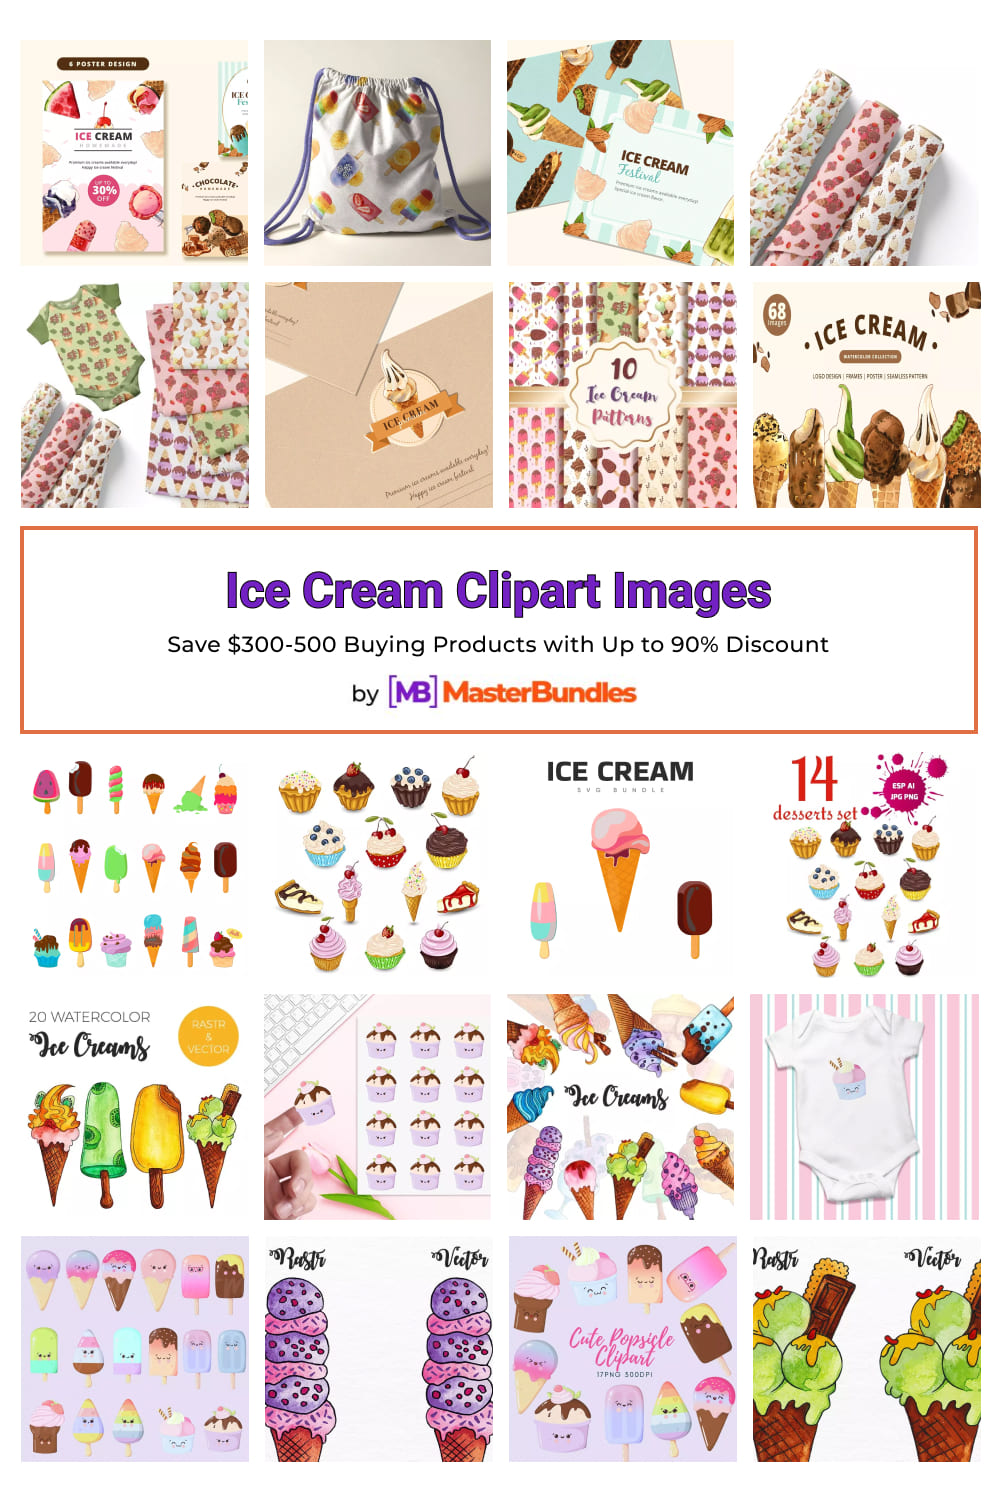 Ice Cream Clipart Images Pinterest image.